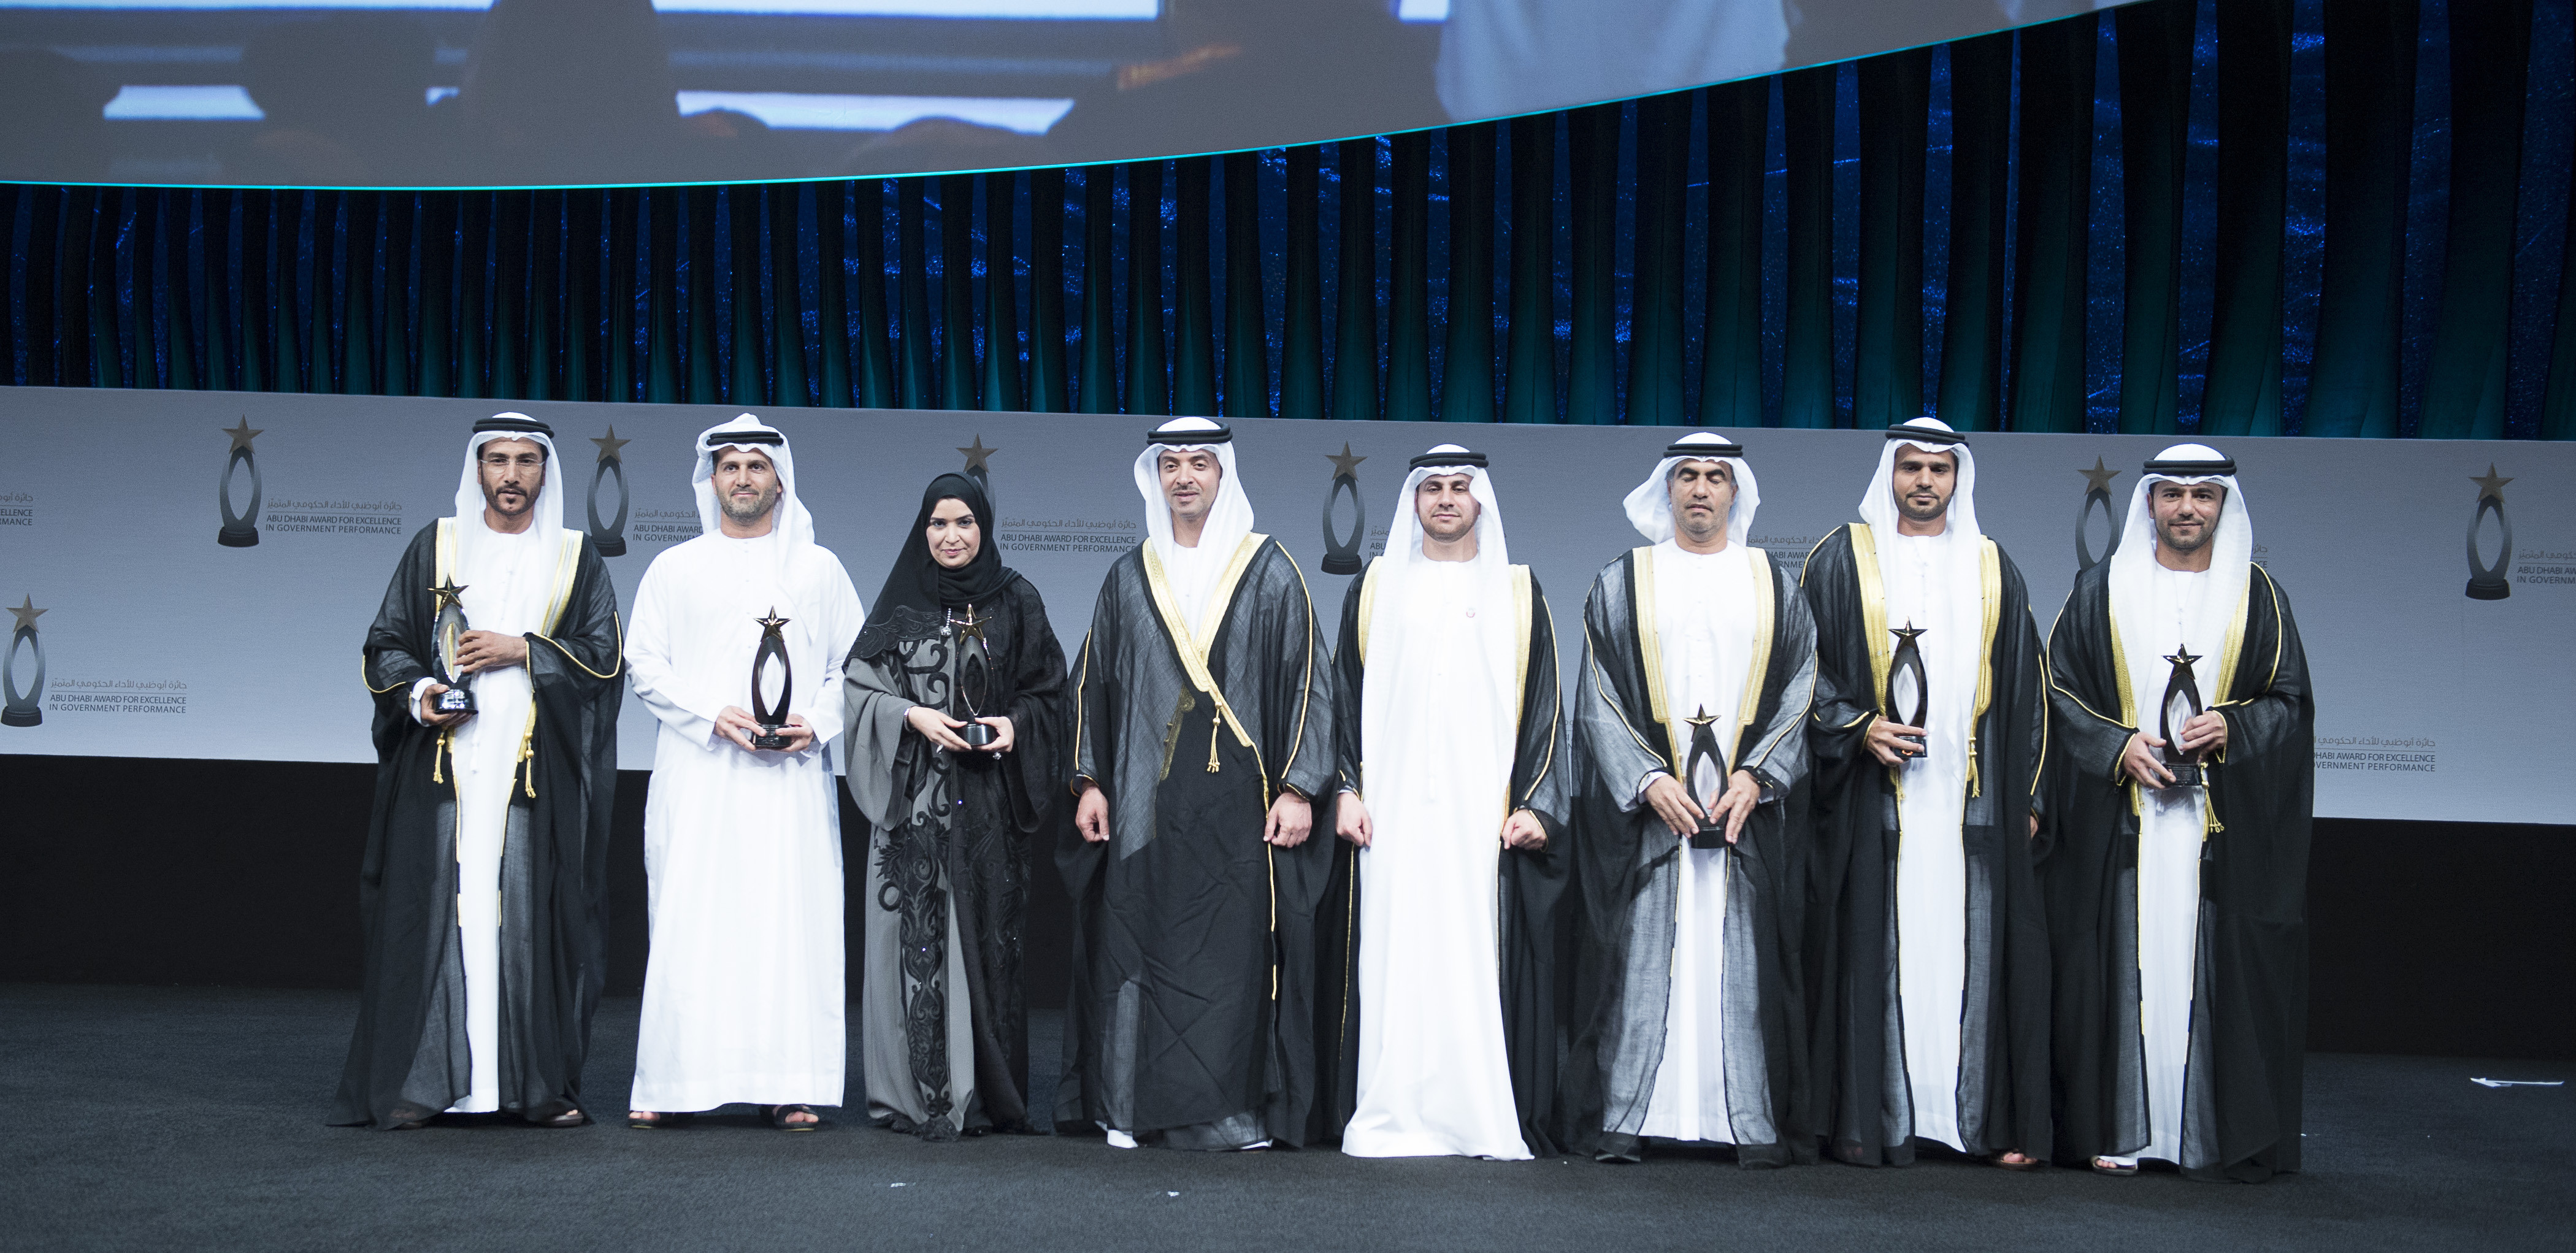 ADAEP - Abu Dhabi award for excellence - November 2015